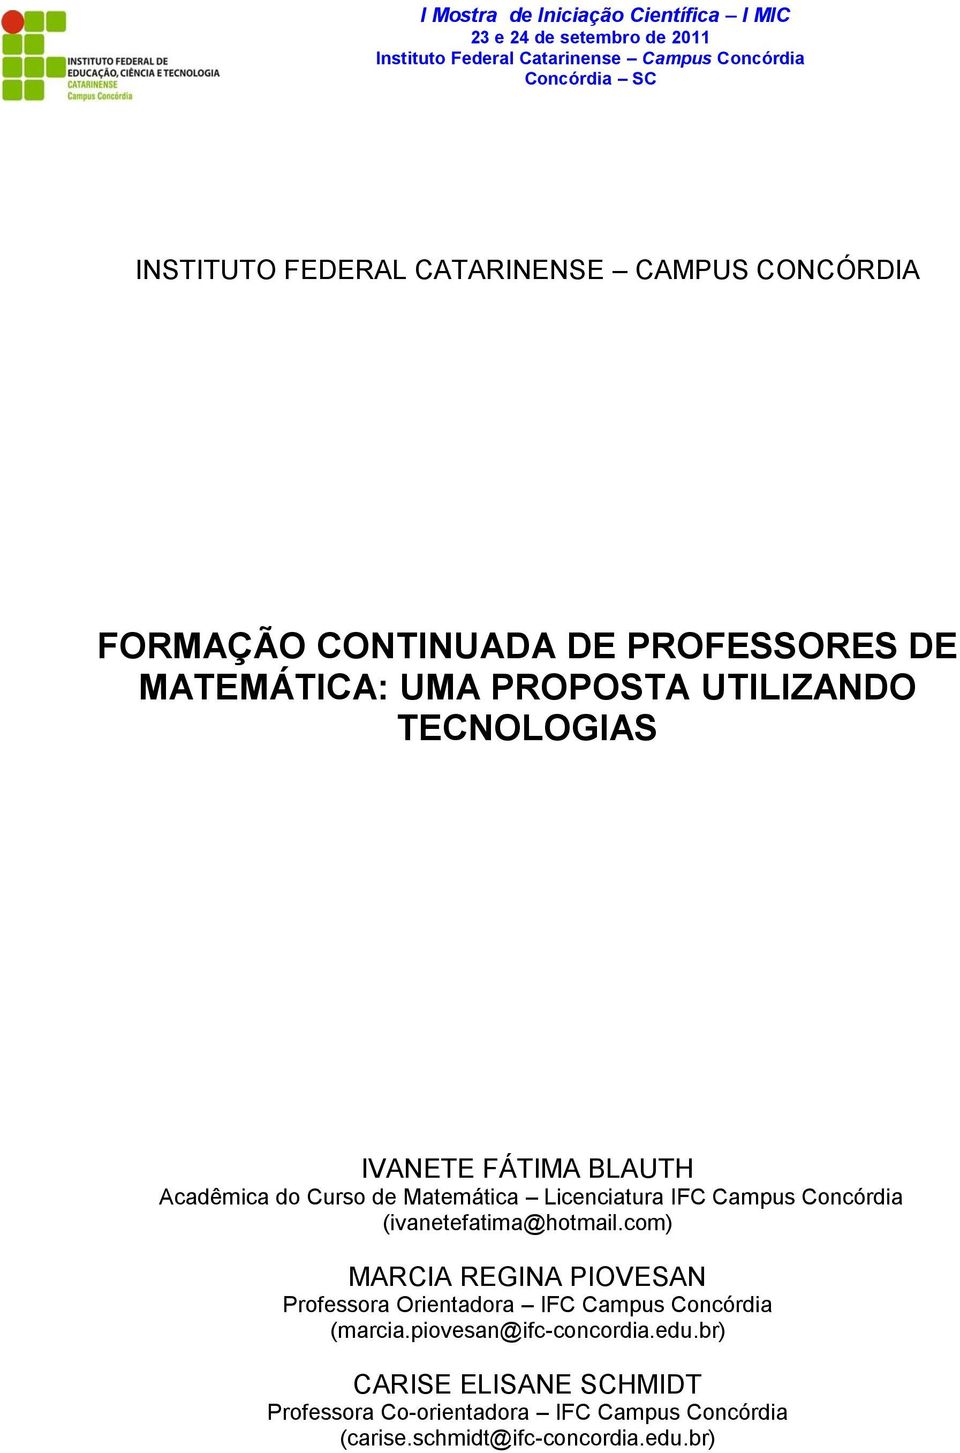 do Curso de Matemática Licenciatura IFC Campus Concórdia (ivanetefatima@hotmail.